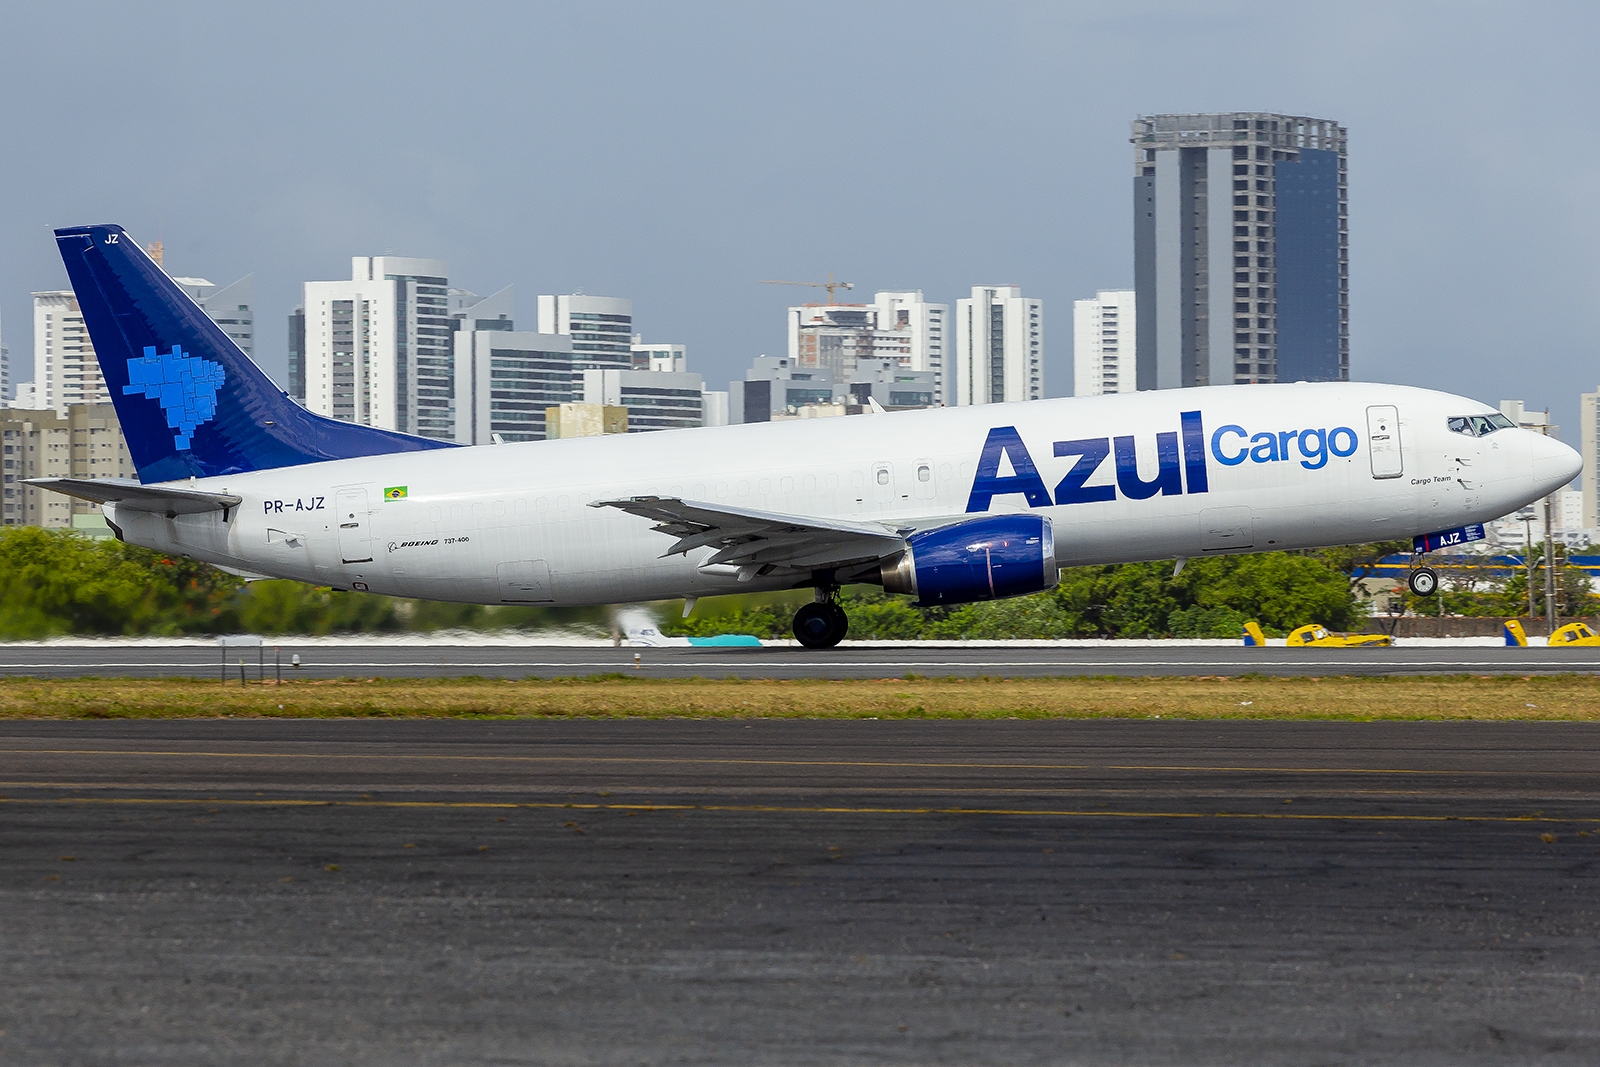 PR-AJZ - Boeing 737-400F